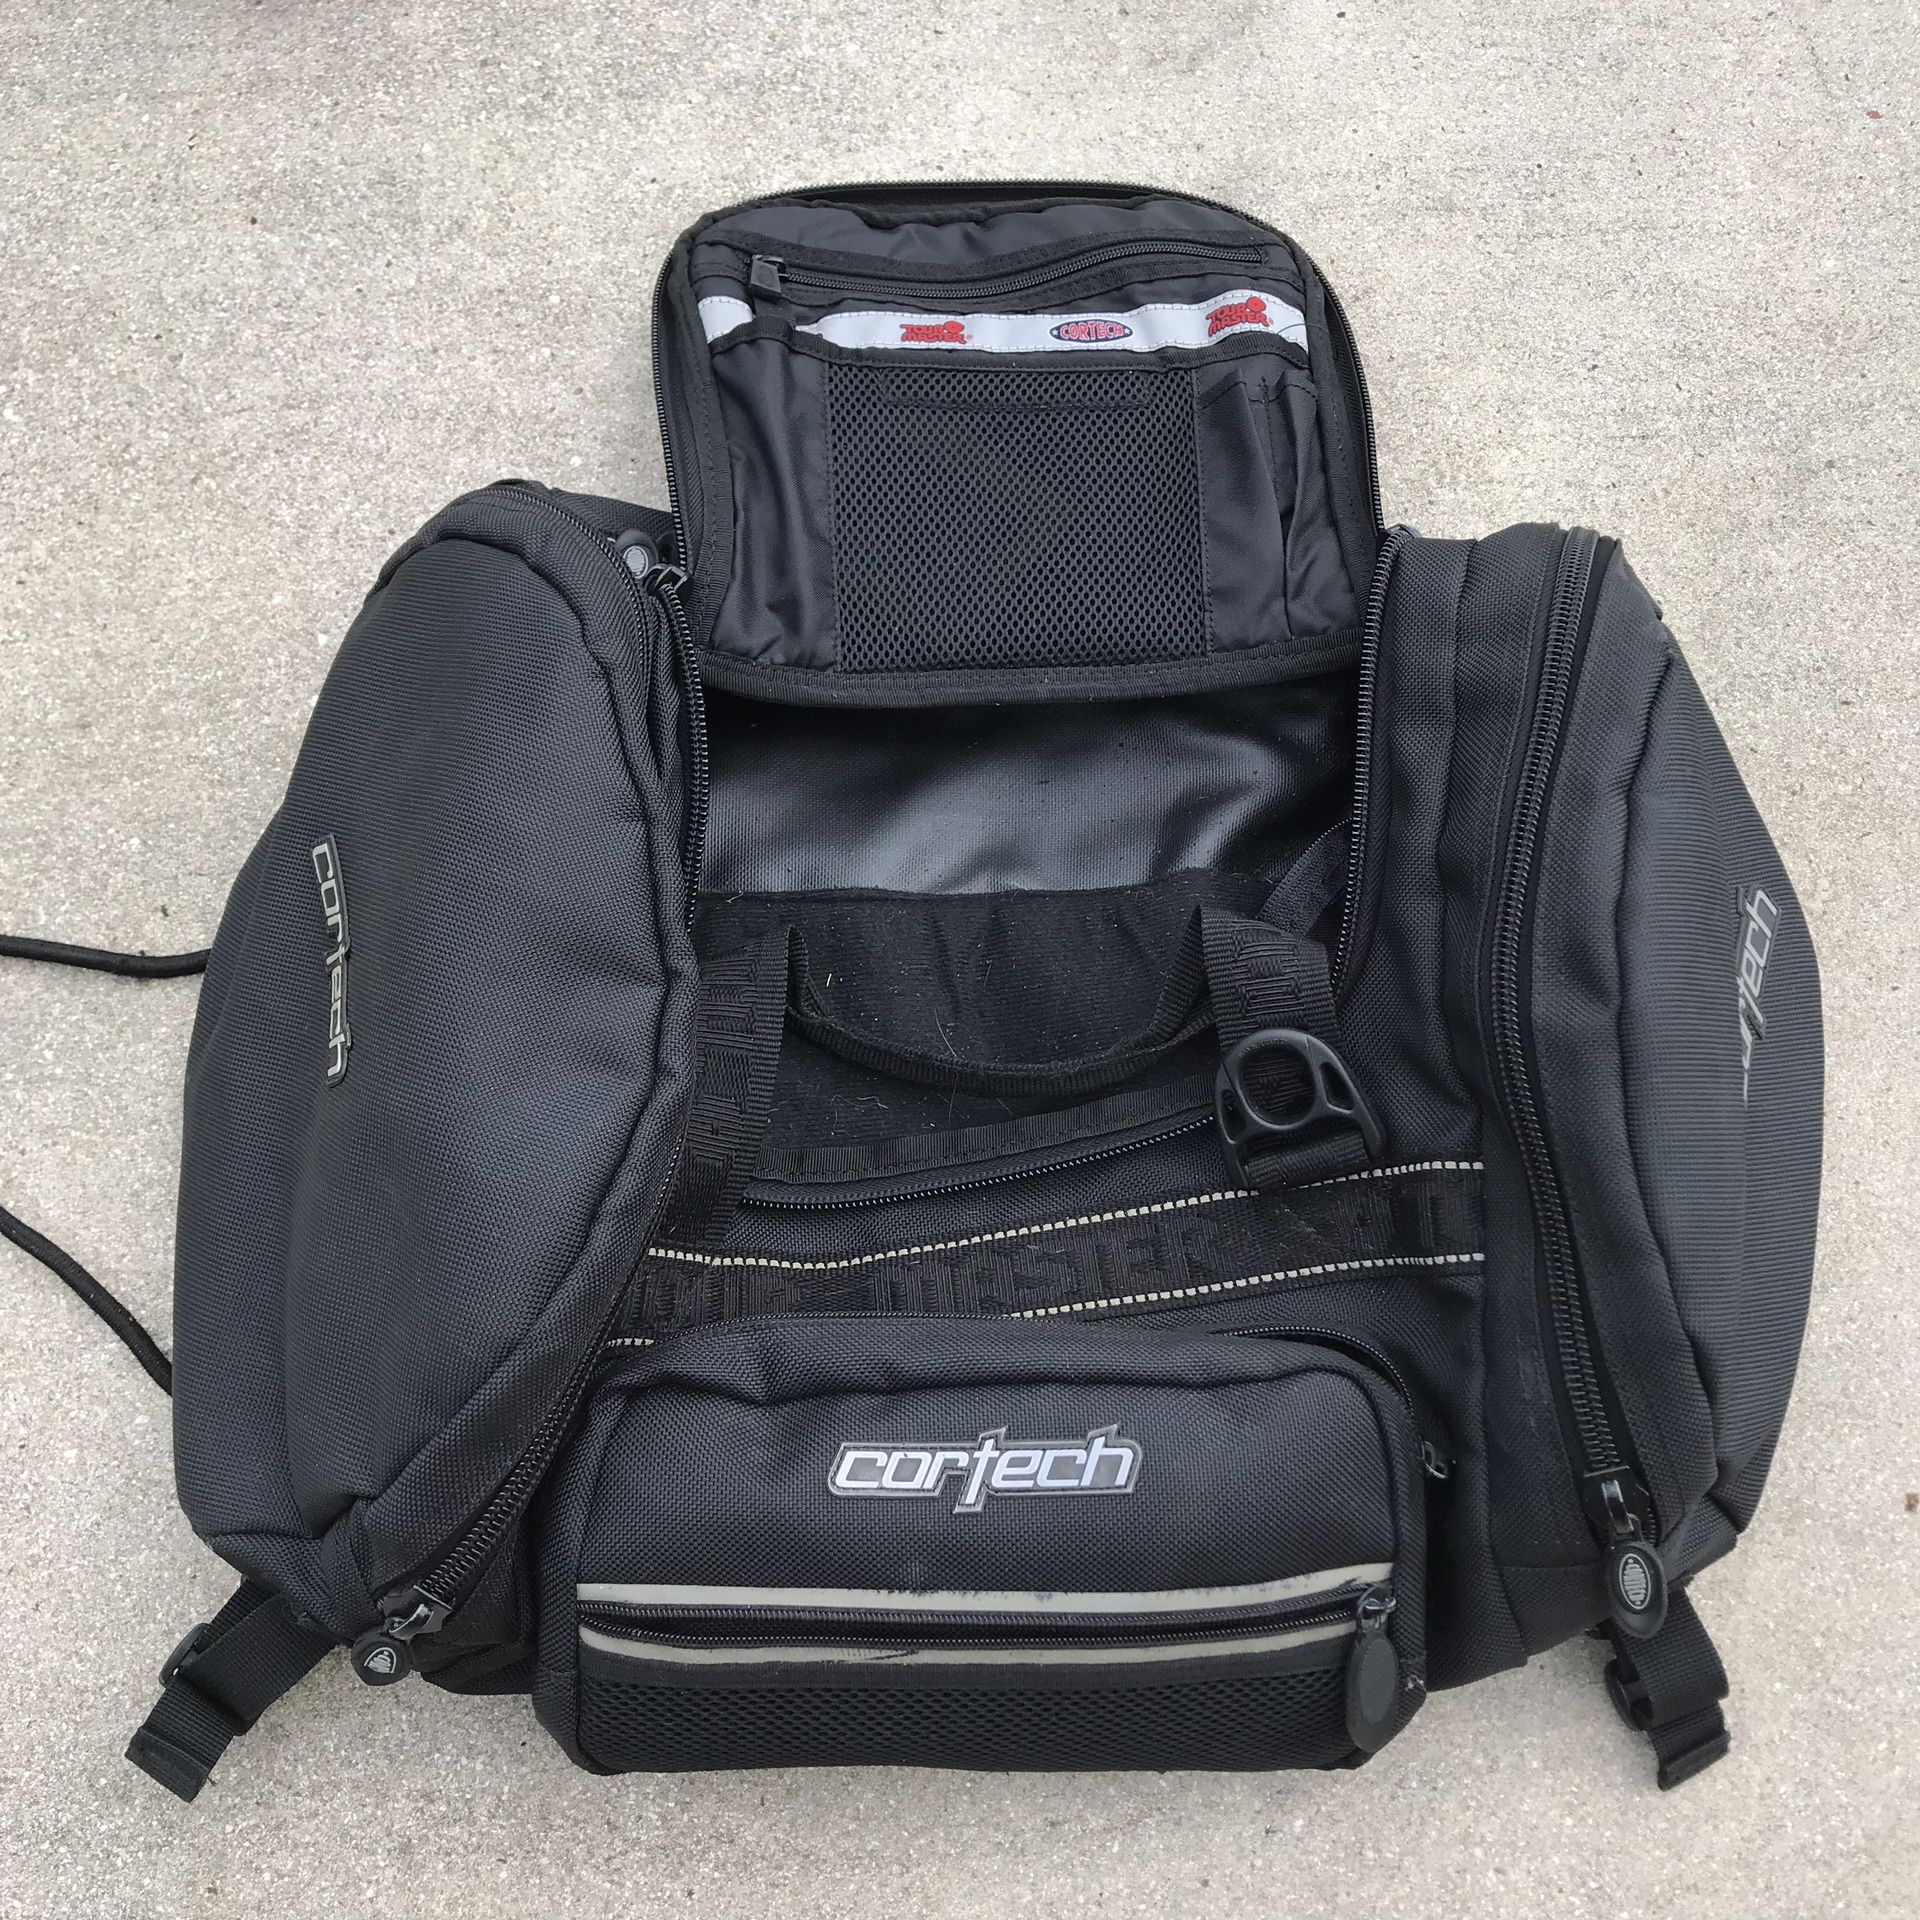 Cortech Motorcycle Travel Bag